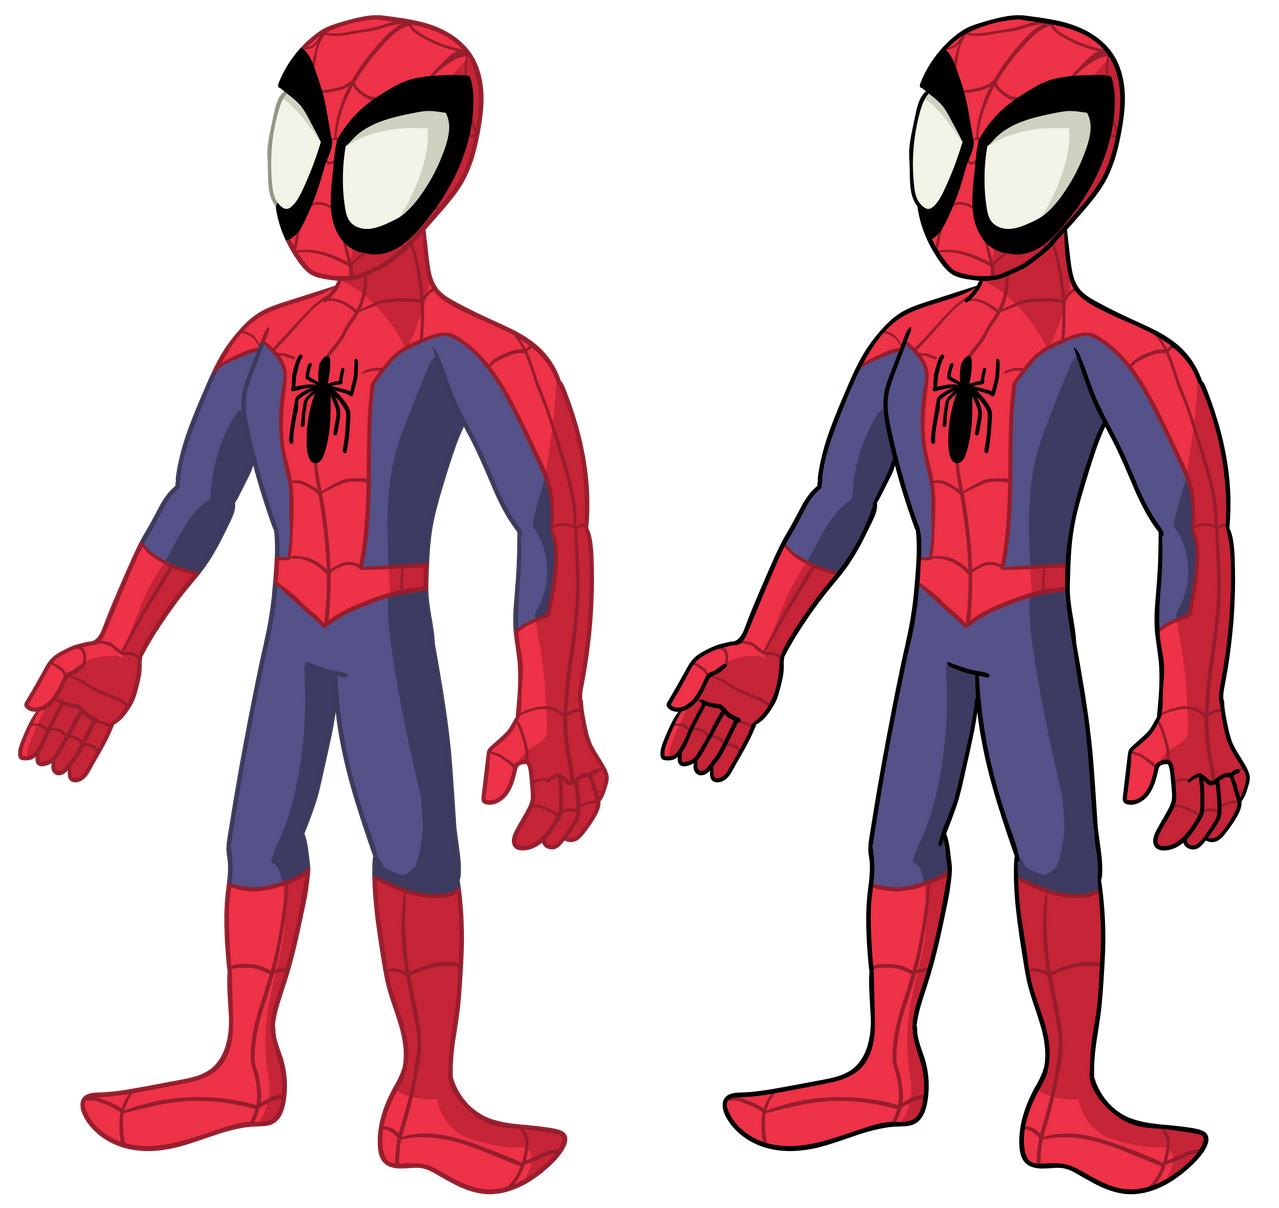 Spider-Man Animated Concept Art by Spizzlelep on DeviantArt